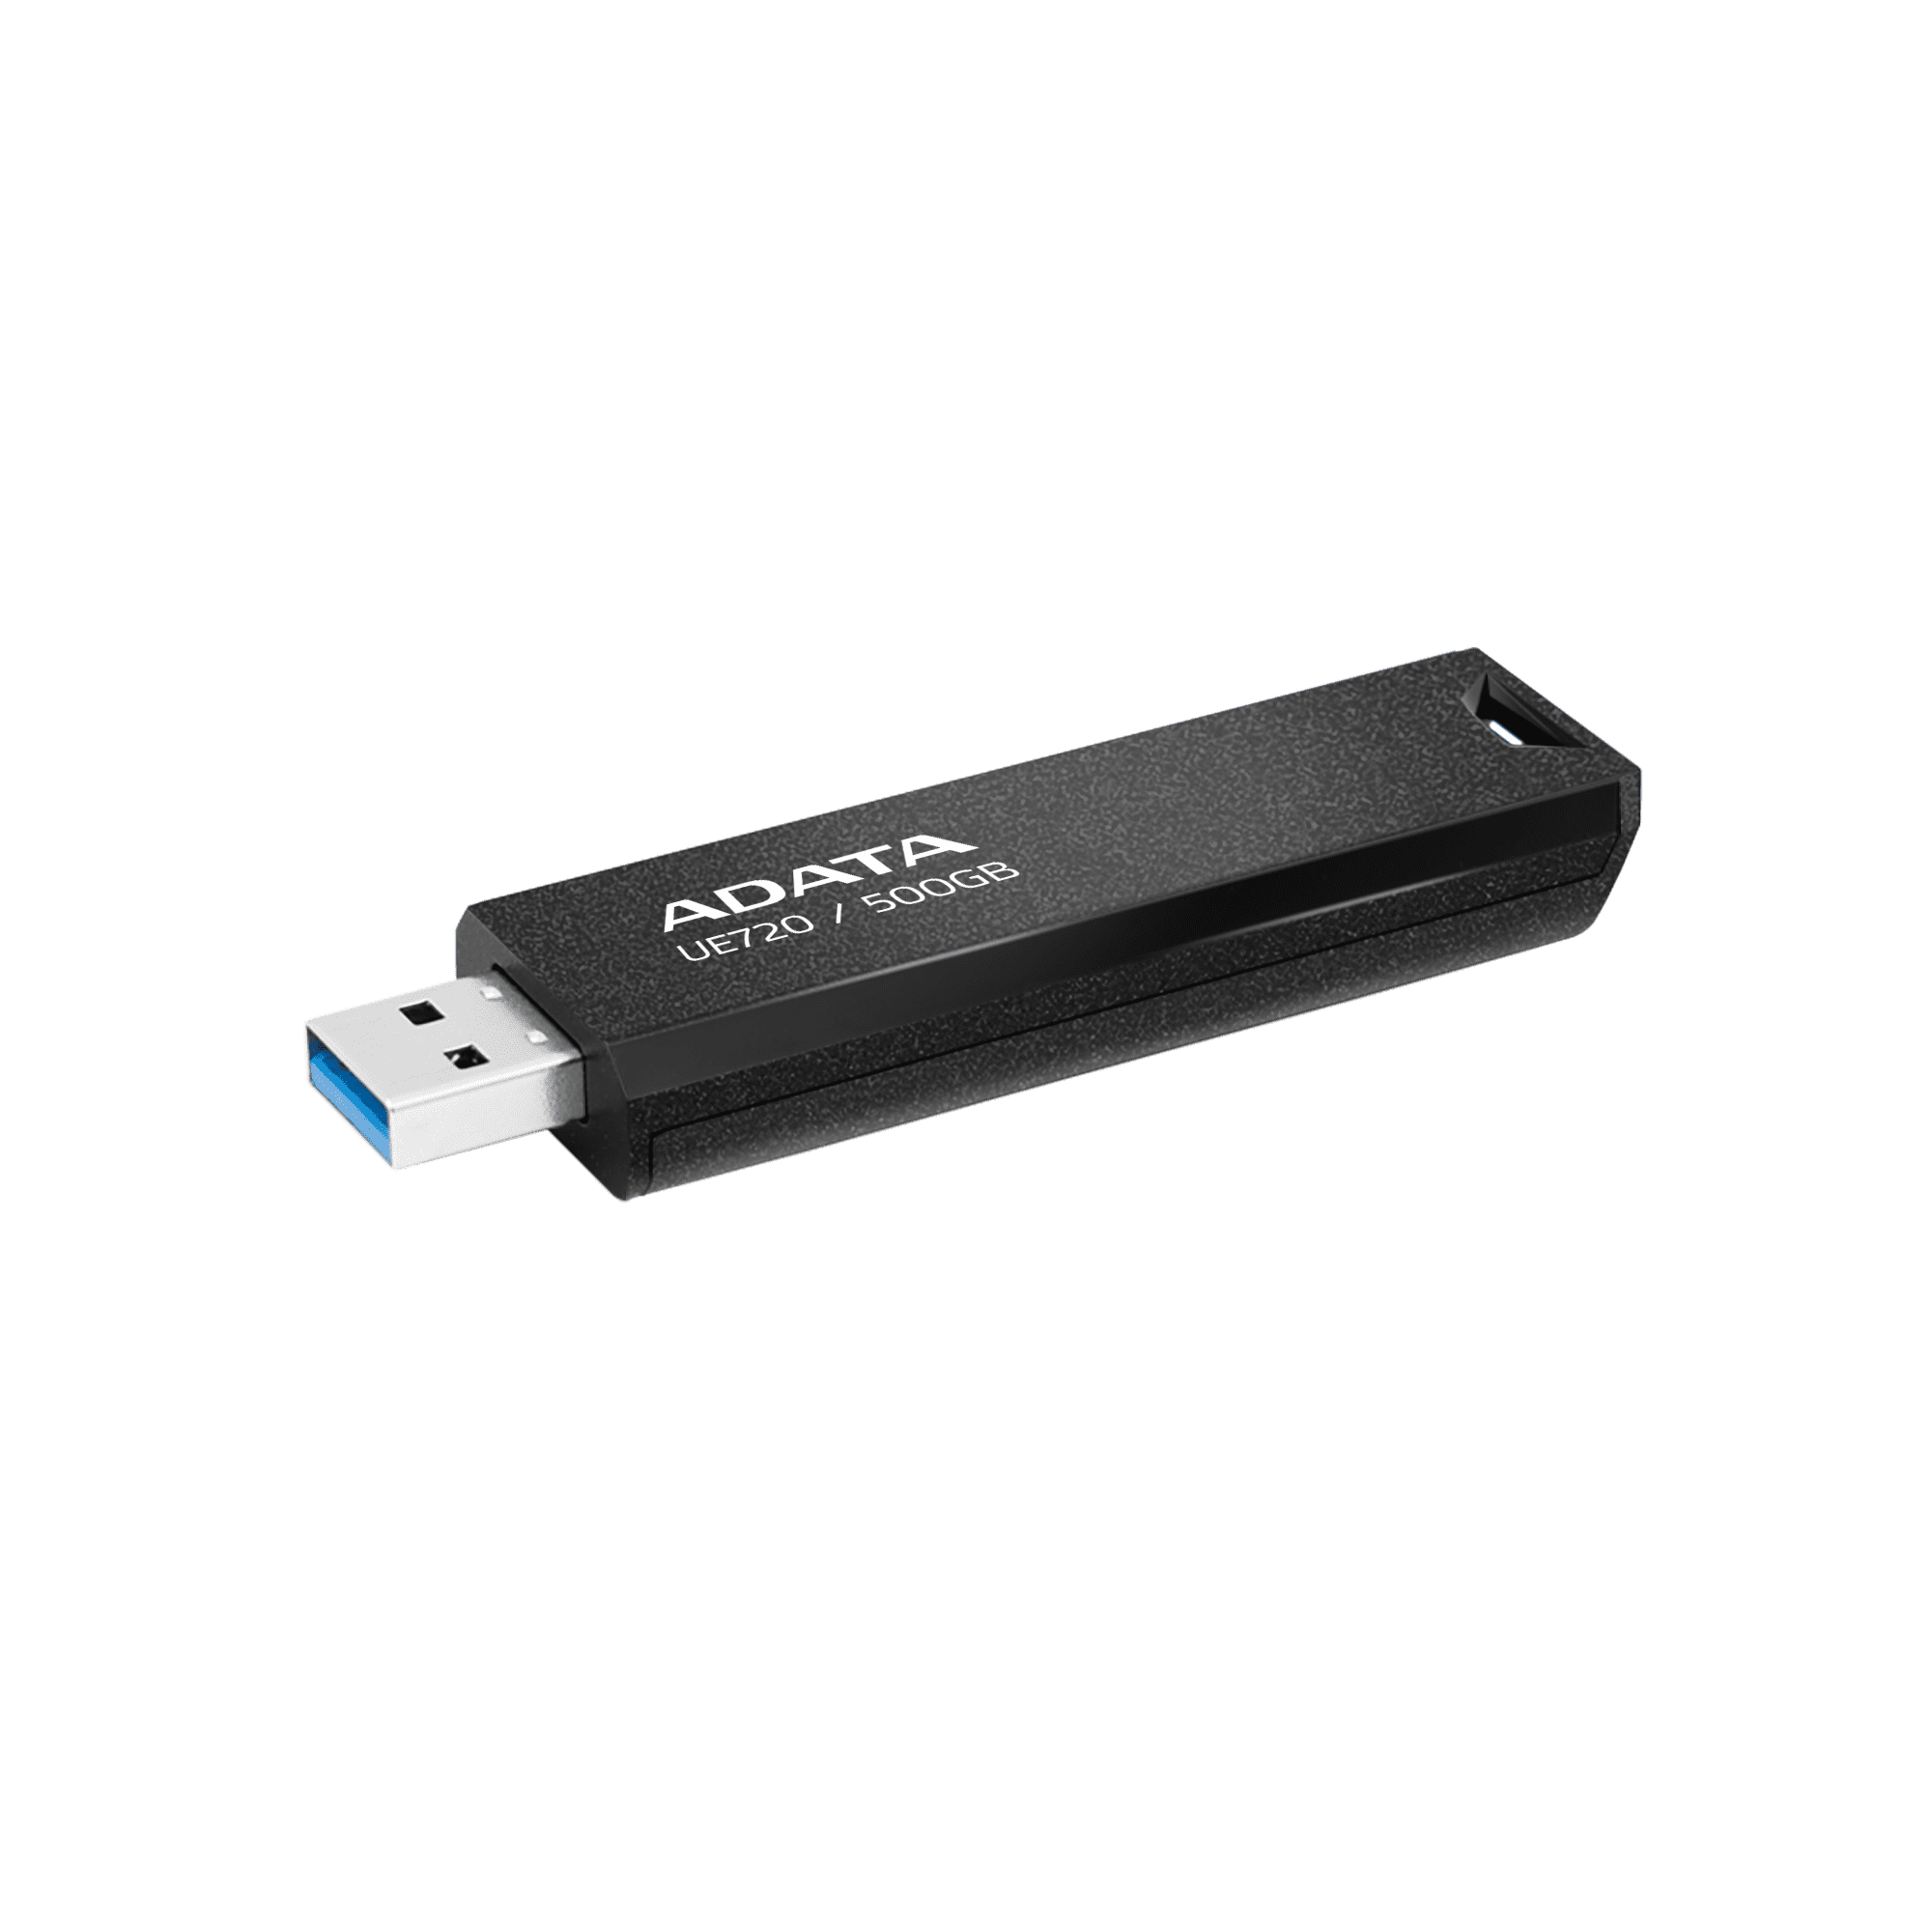 UE720 USB Flash Drive